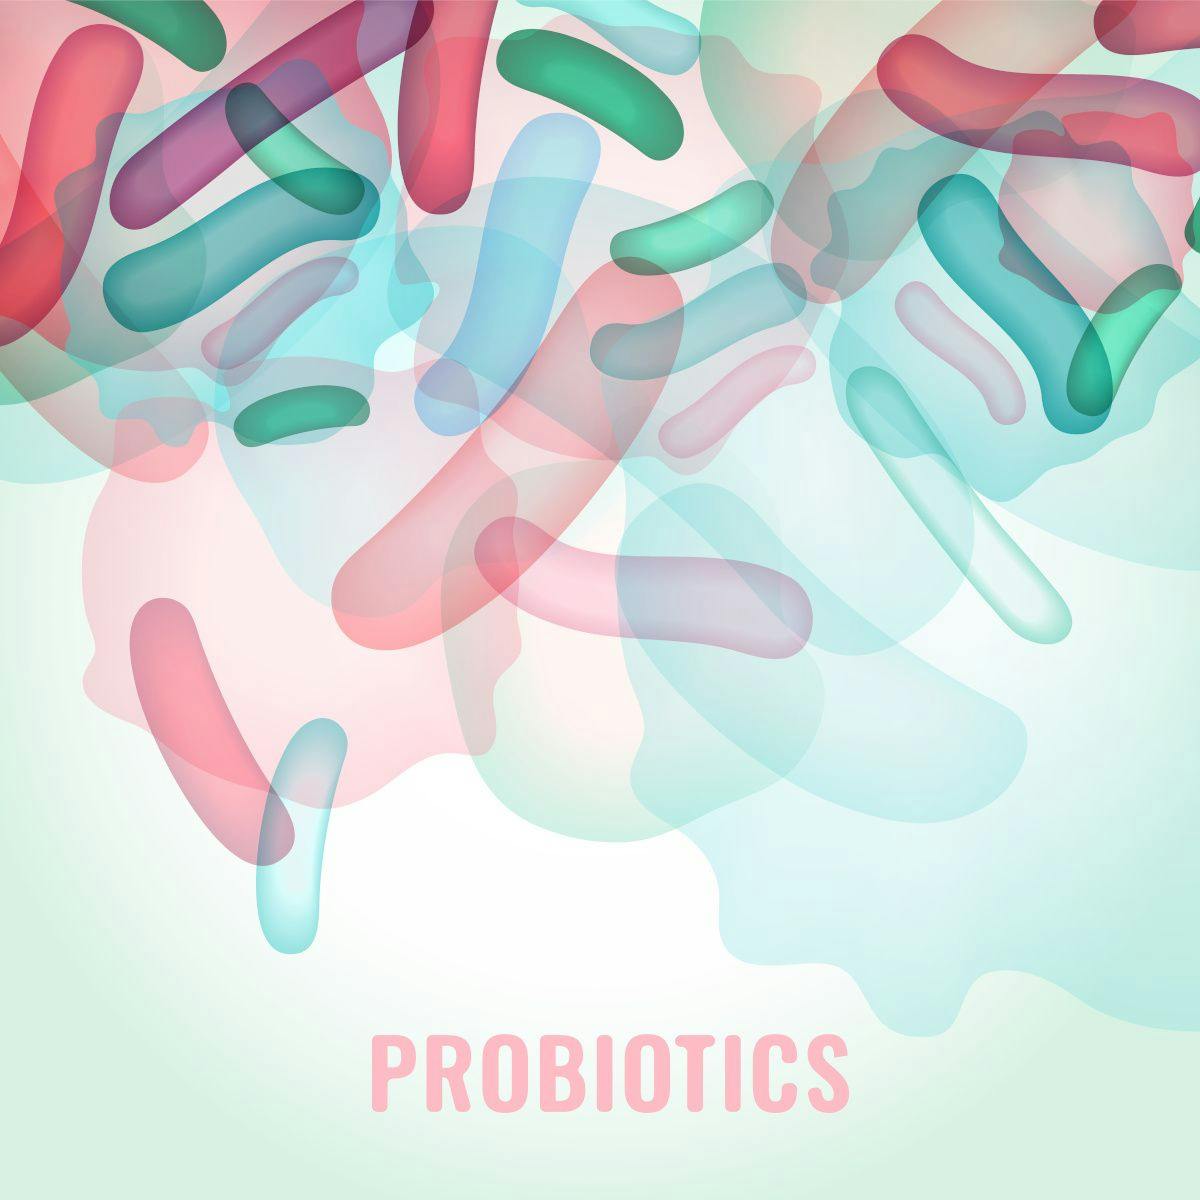 Ingredients to watch: probiotics